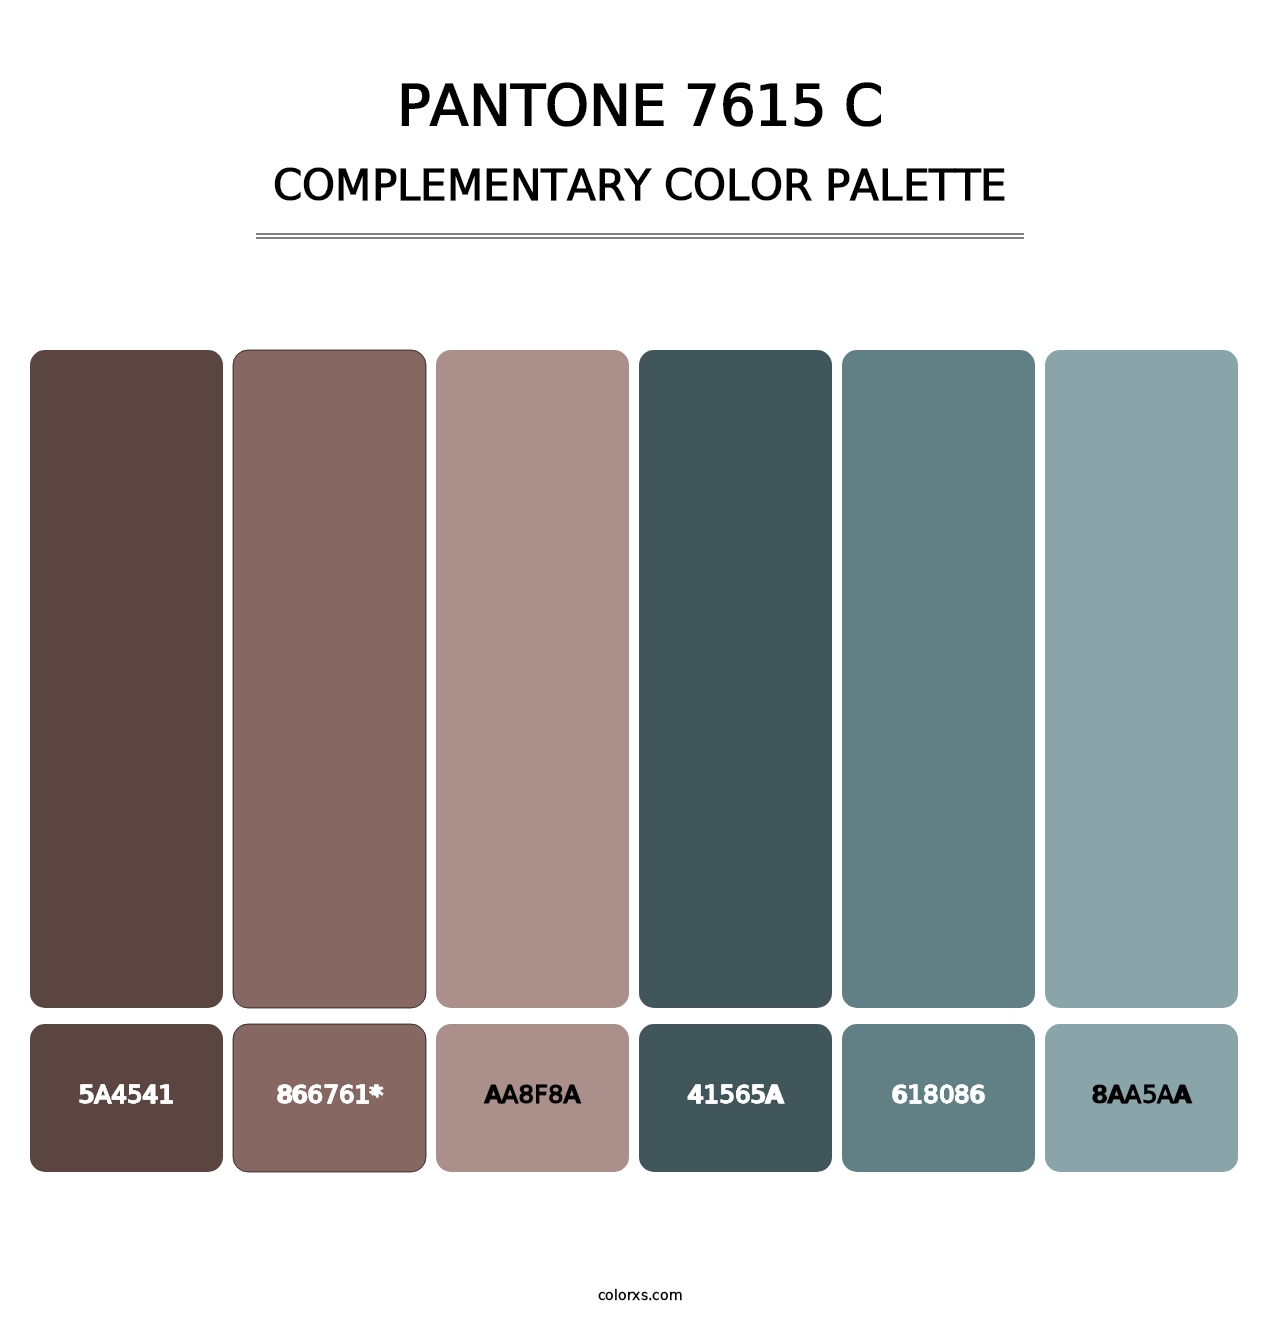 PANTONE 7615 C - Complementary Color Palette